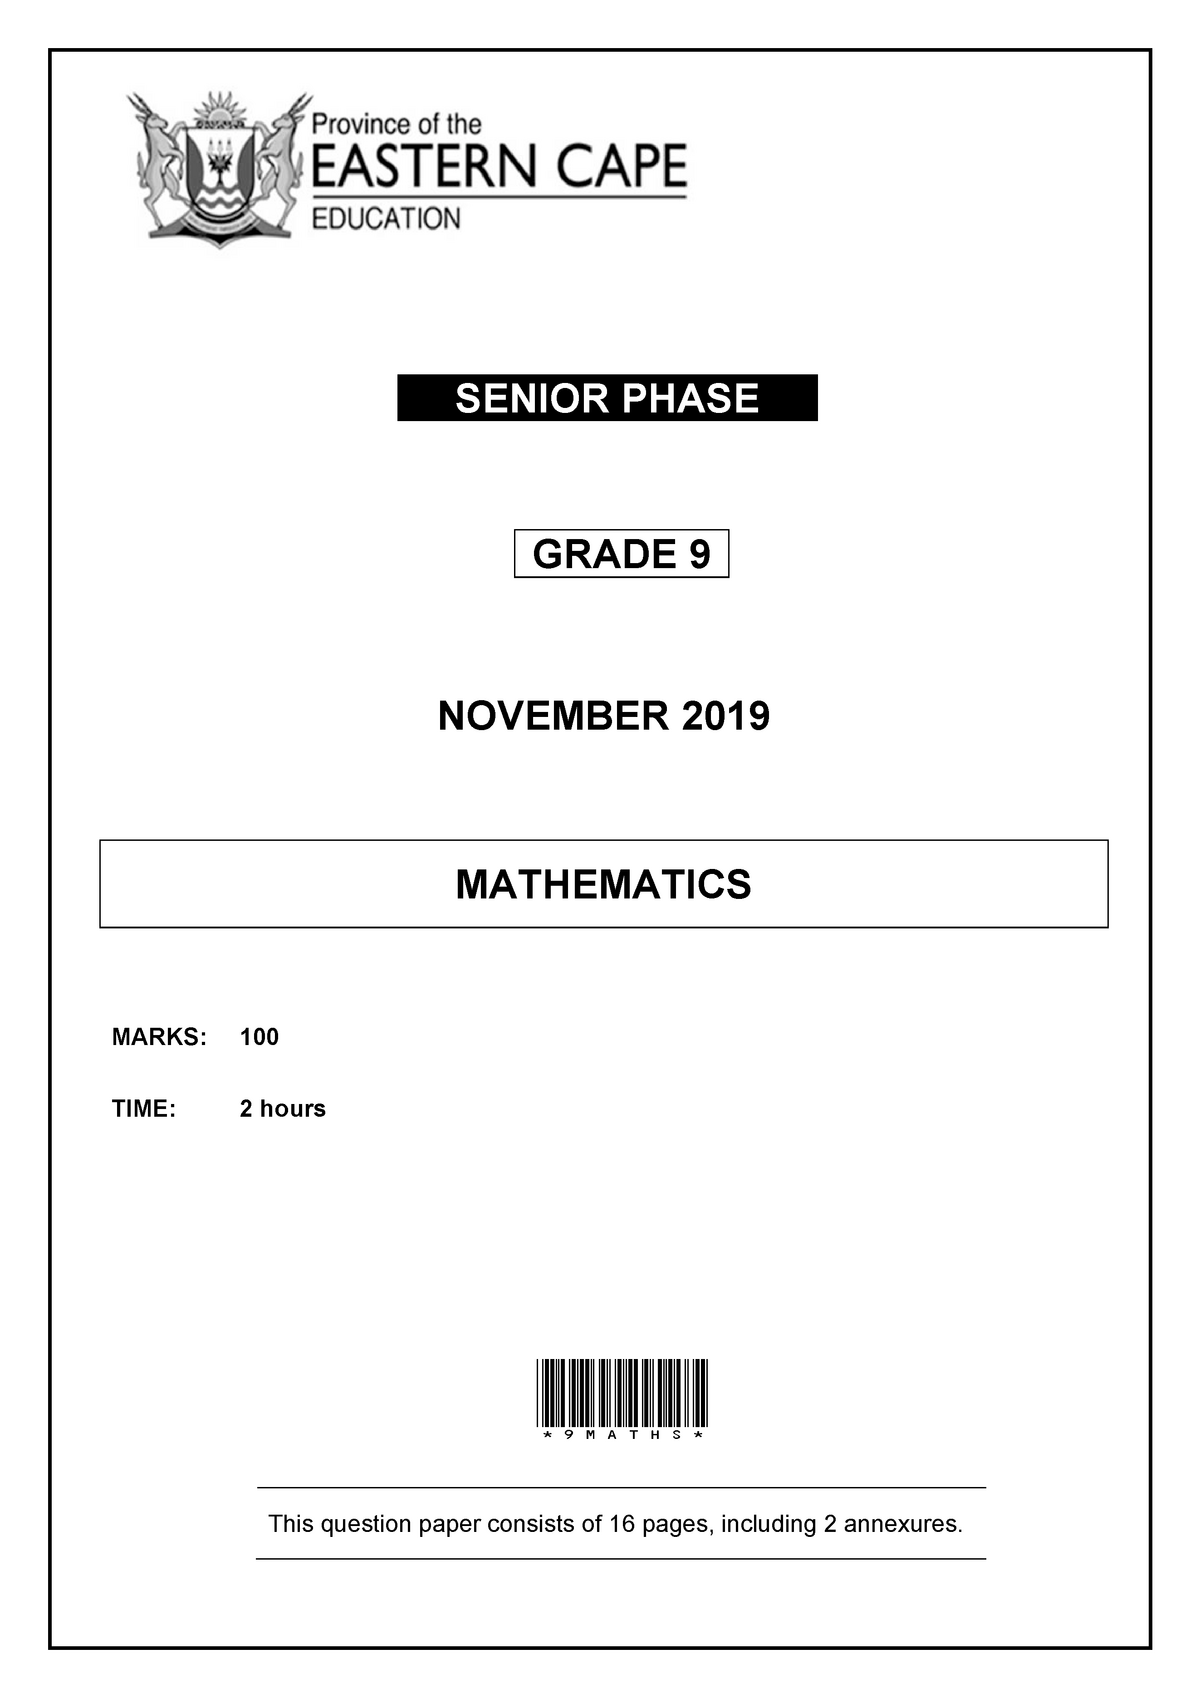 2020-grade-9-maths-final-exam-ec-senior-phase-grade-9-november-2019-mathematics-marks-100